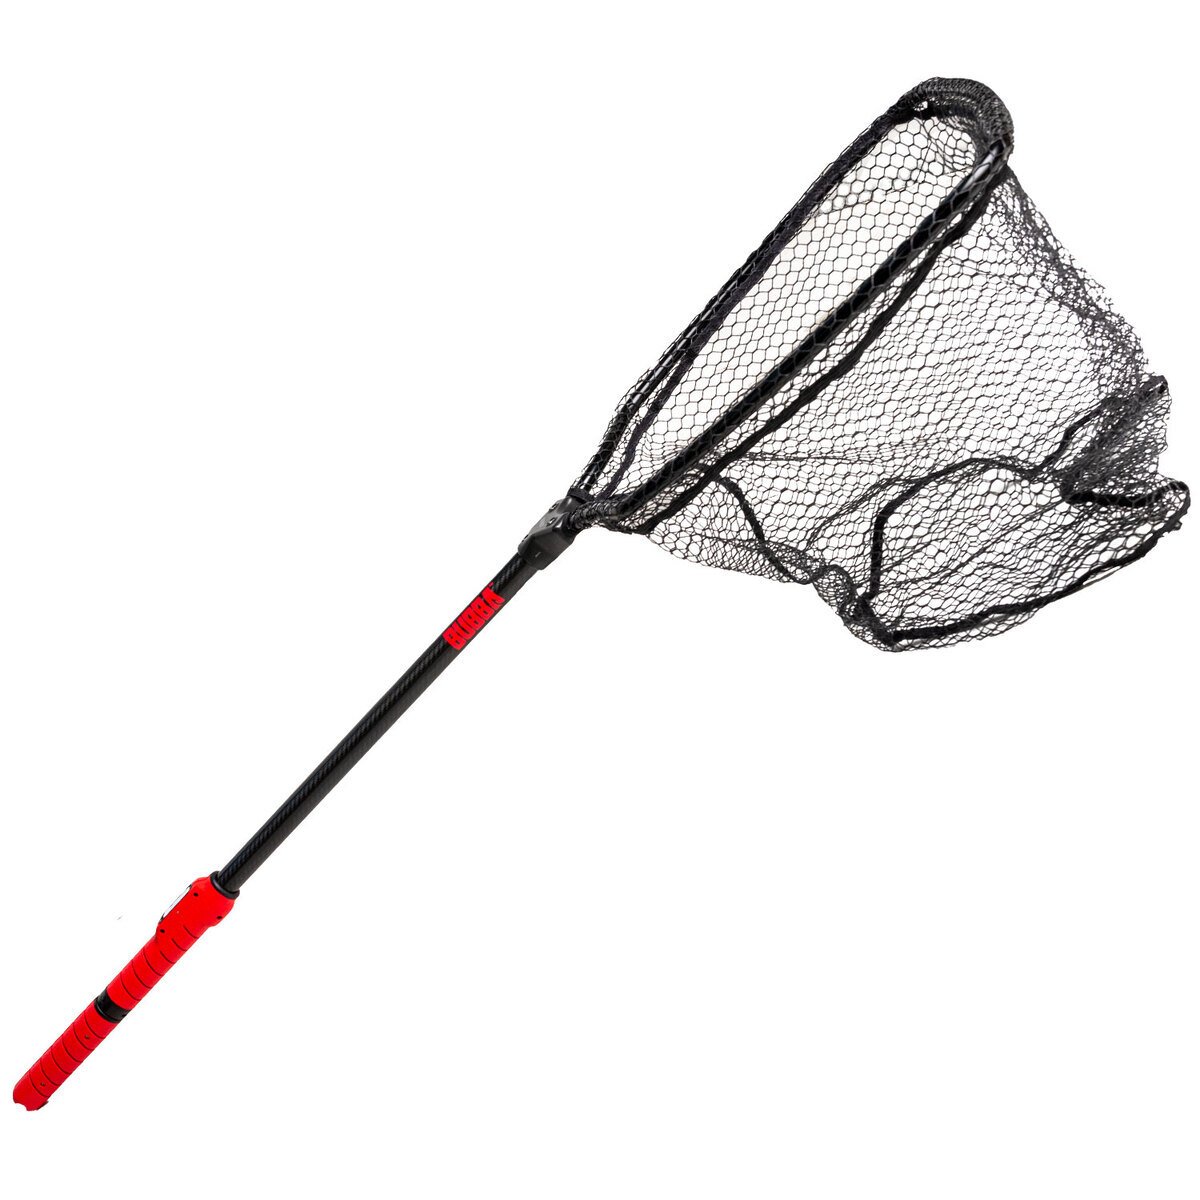 Bubba Blade 1116730 Fishing Net Medium Extendable Net, multi, one size